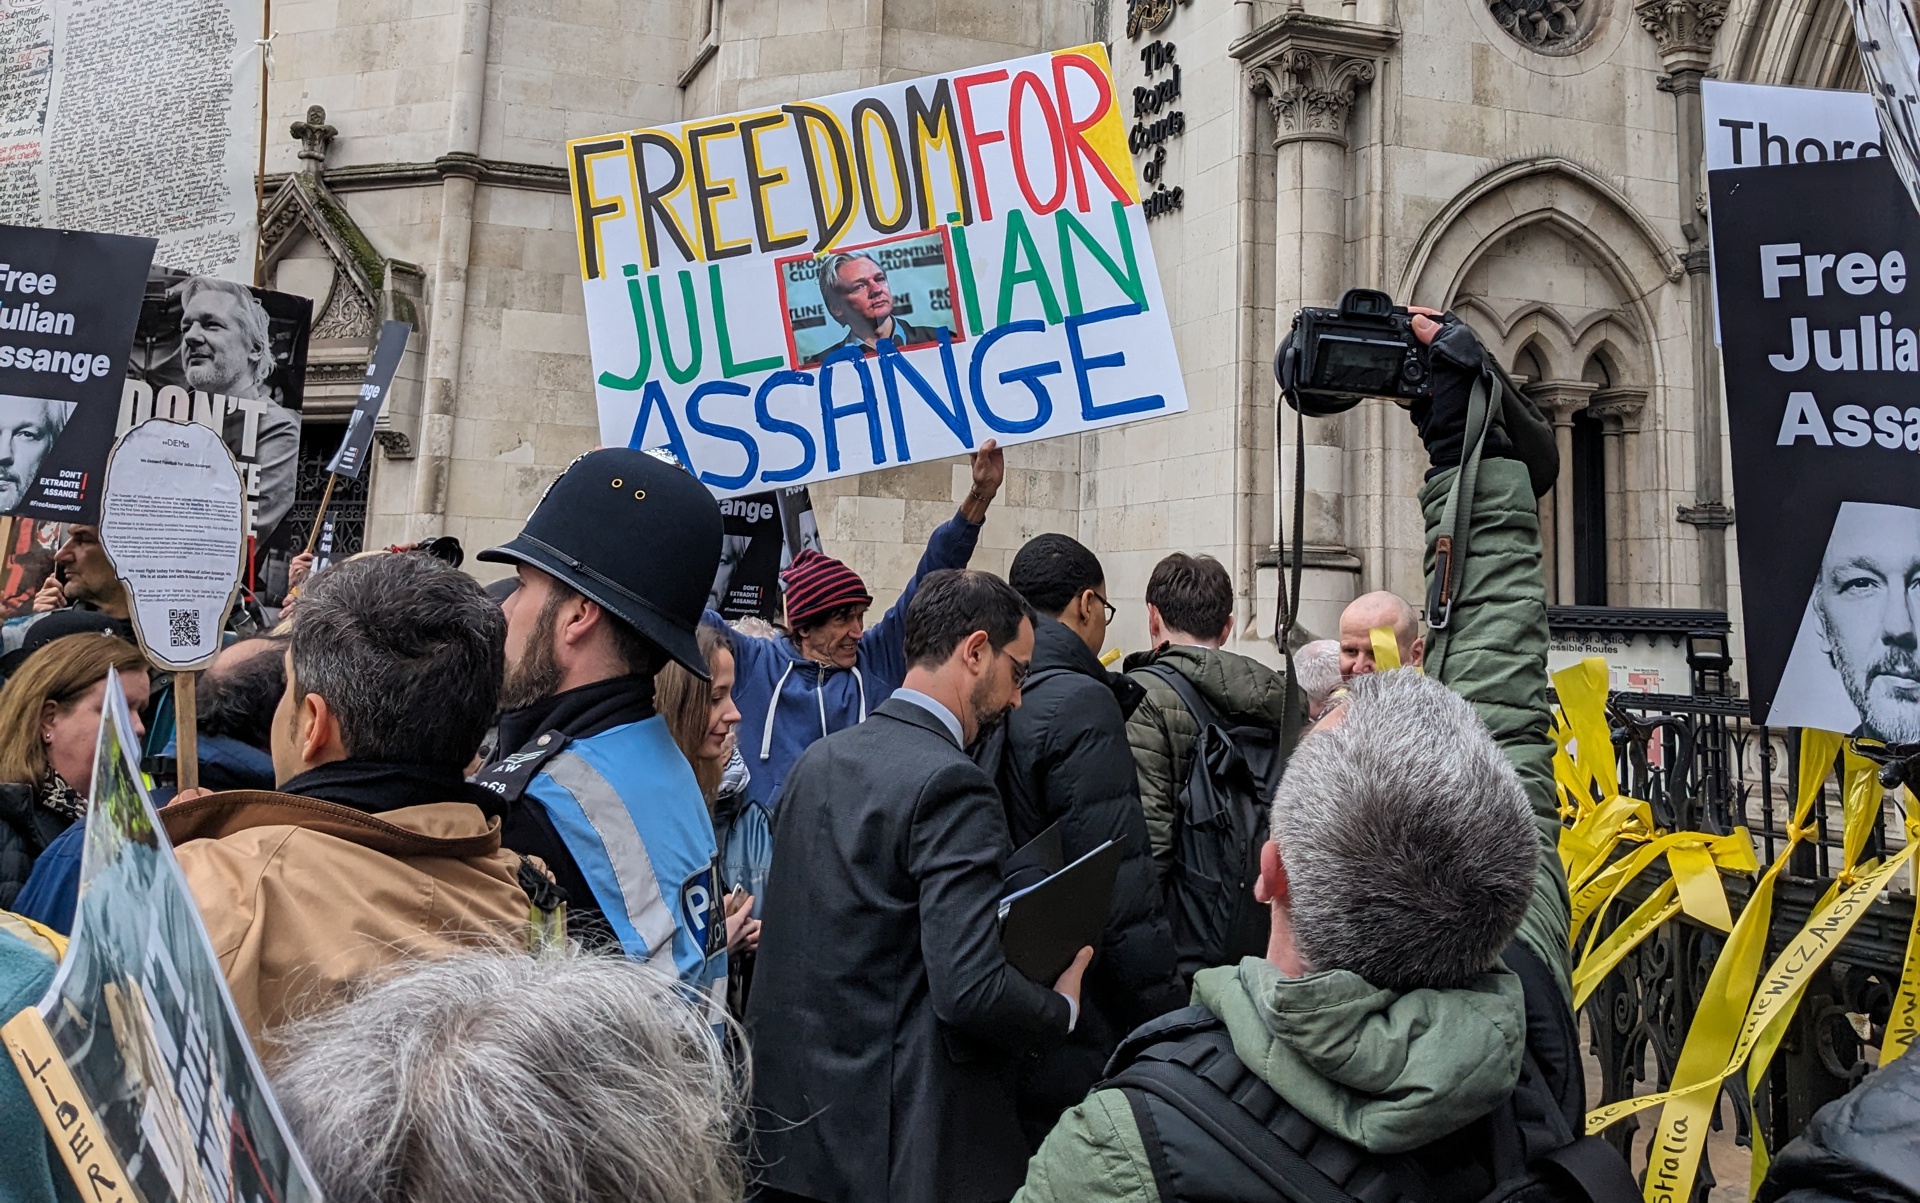 Freedom for Assange